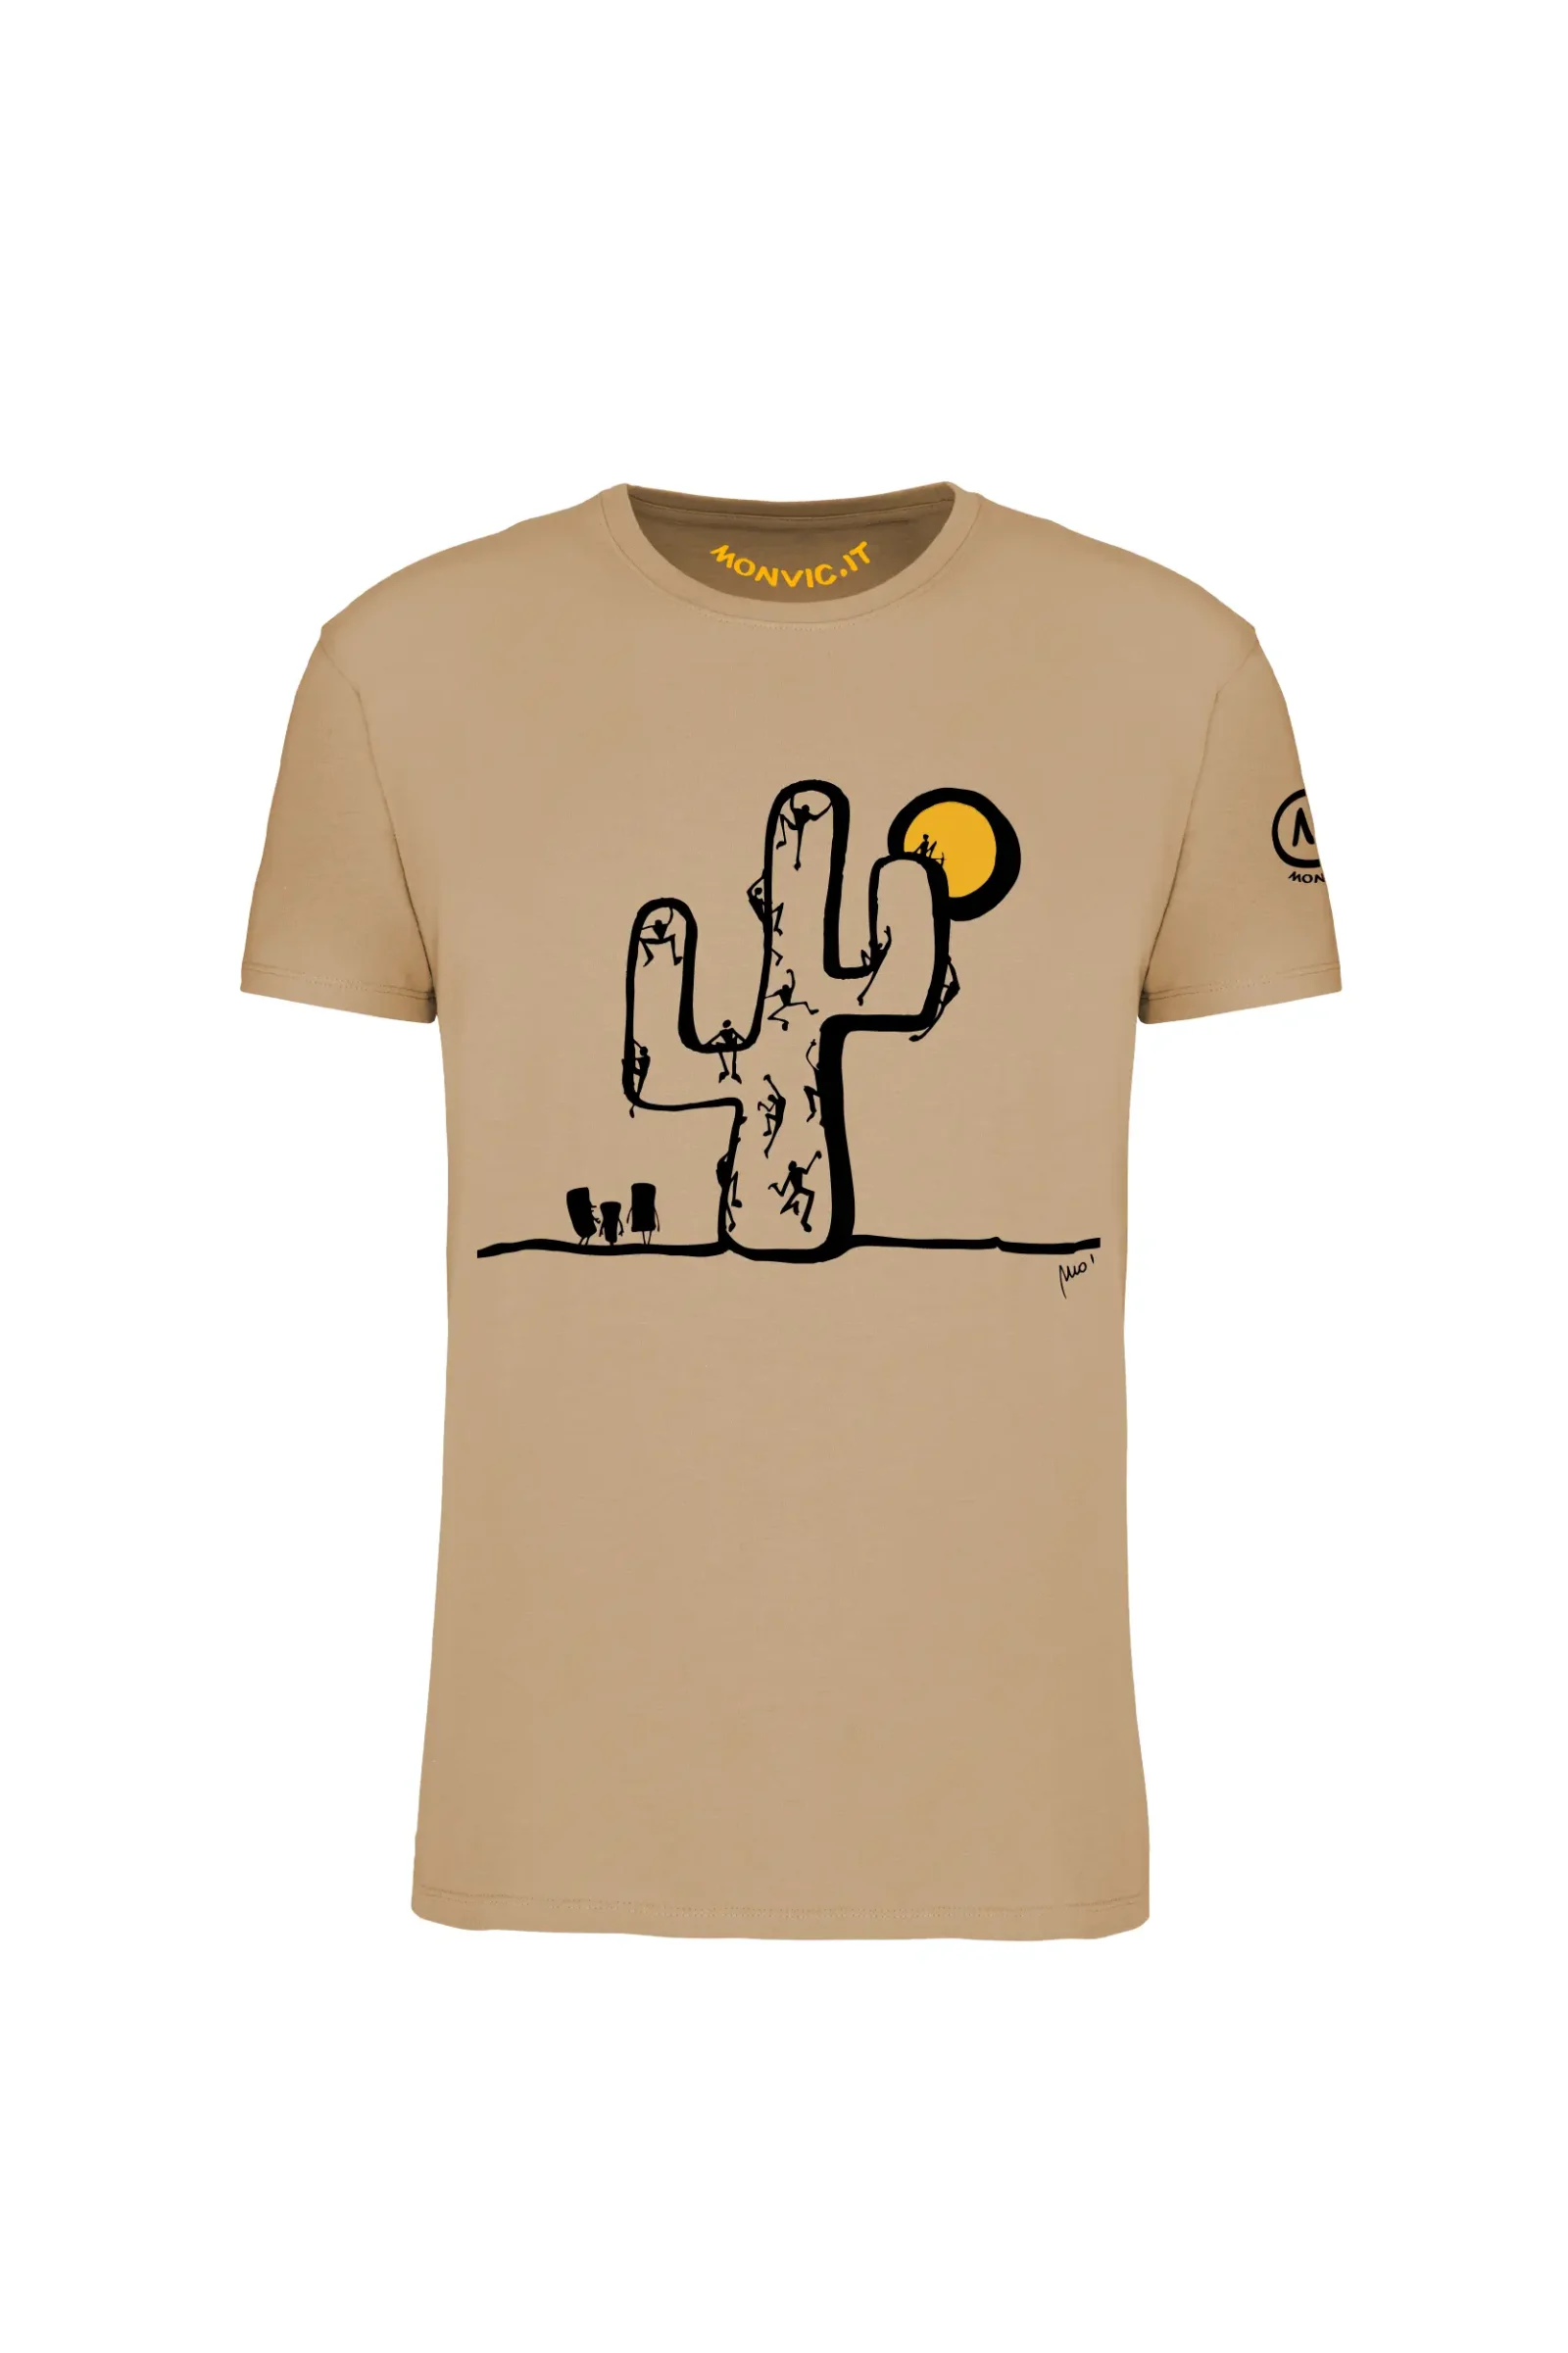 T-shirt arrampicata uomo - cotone organico sabbia - "Cactus" - HASH ORGANIC MONVIC